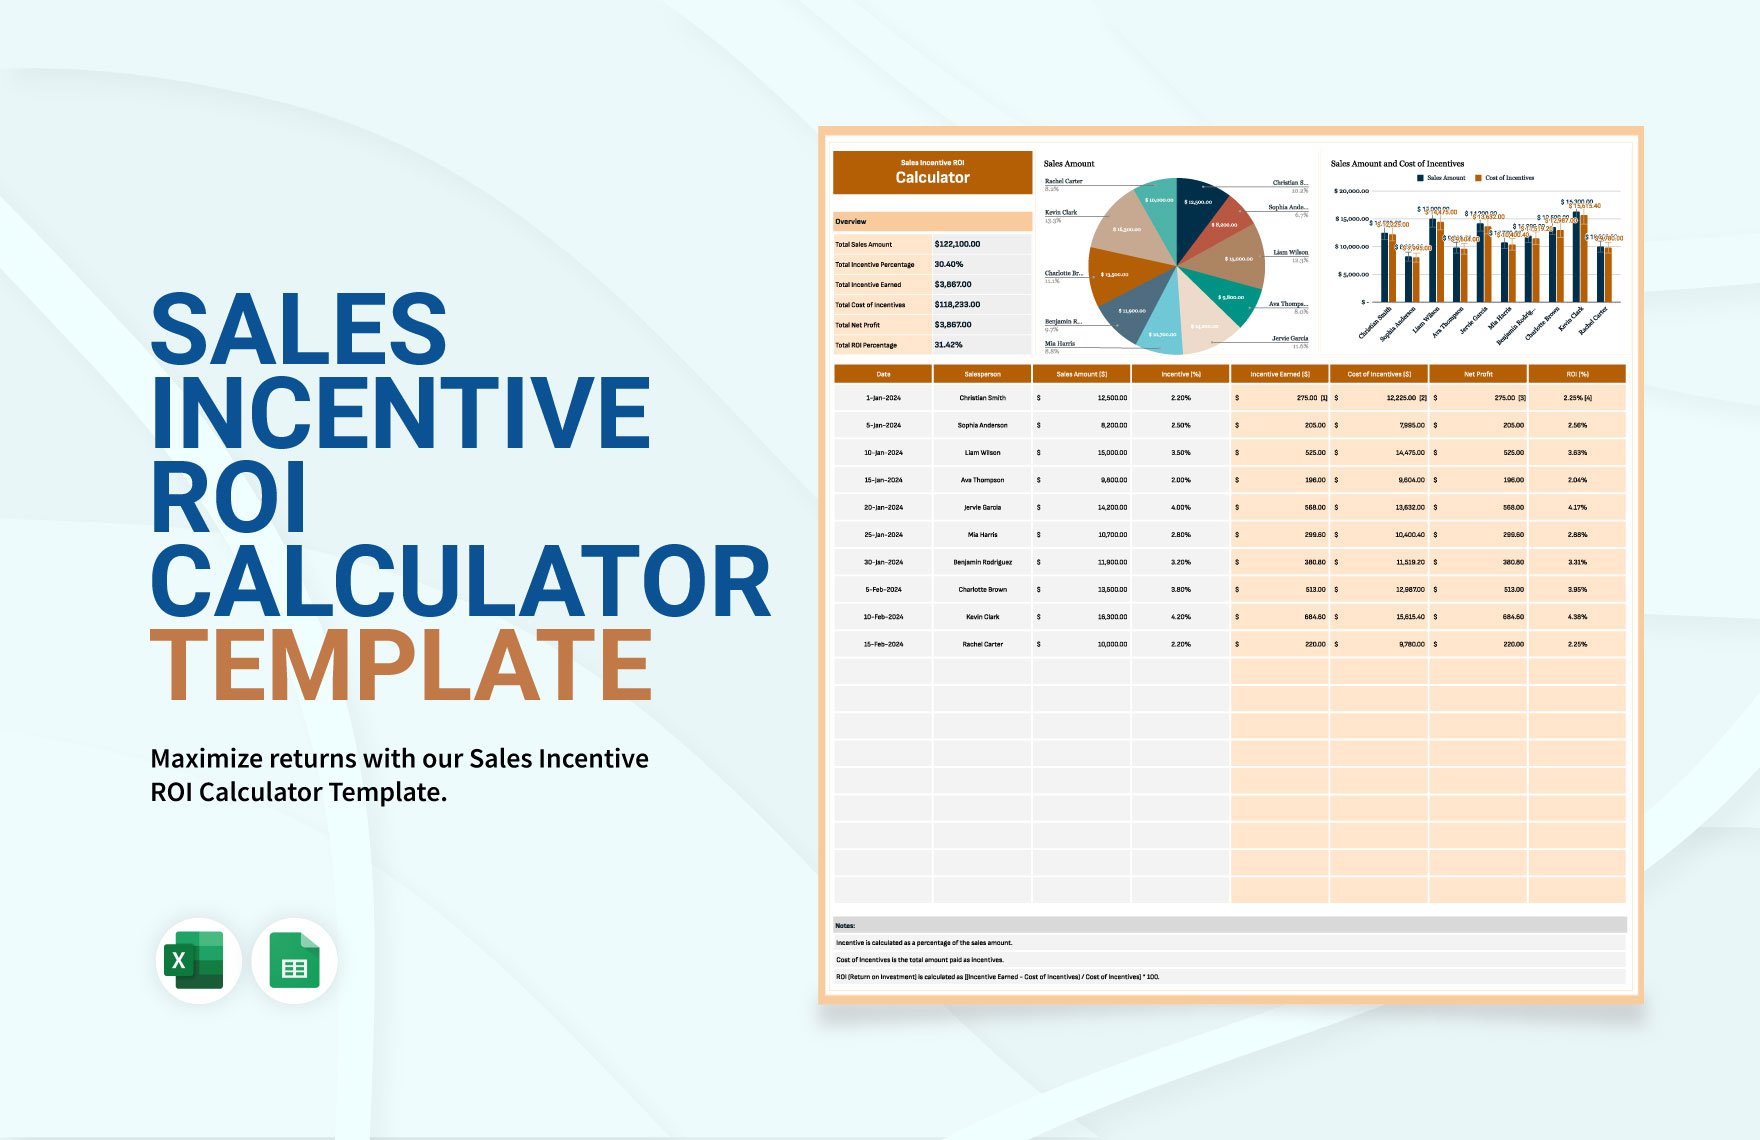 Sales Incentive ROI Calculator Template